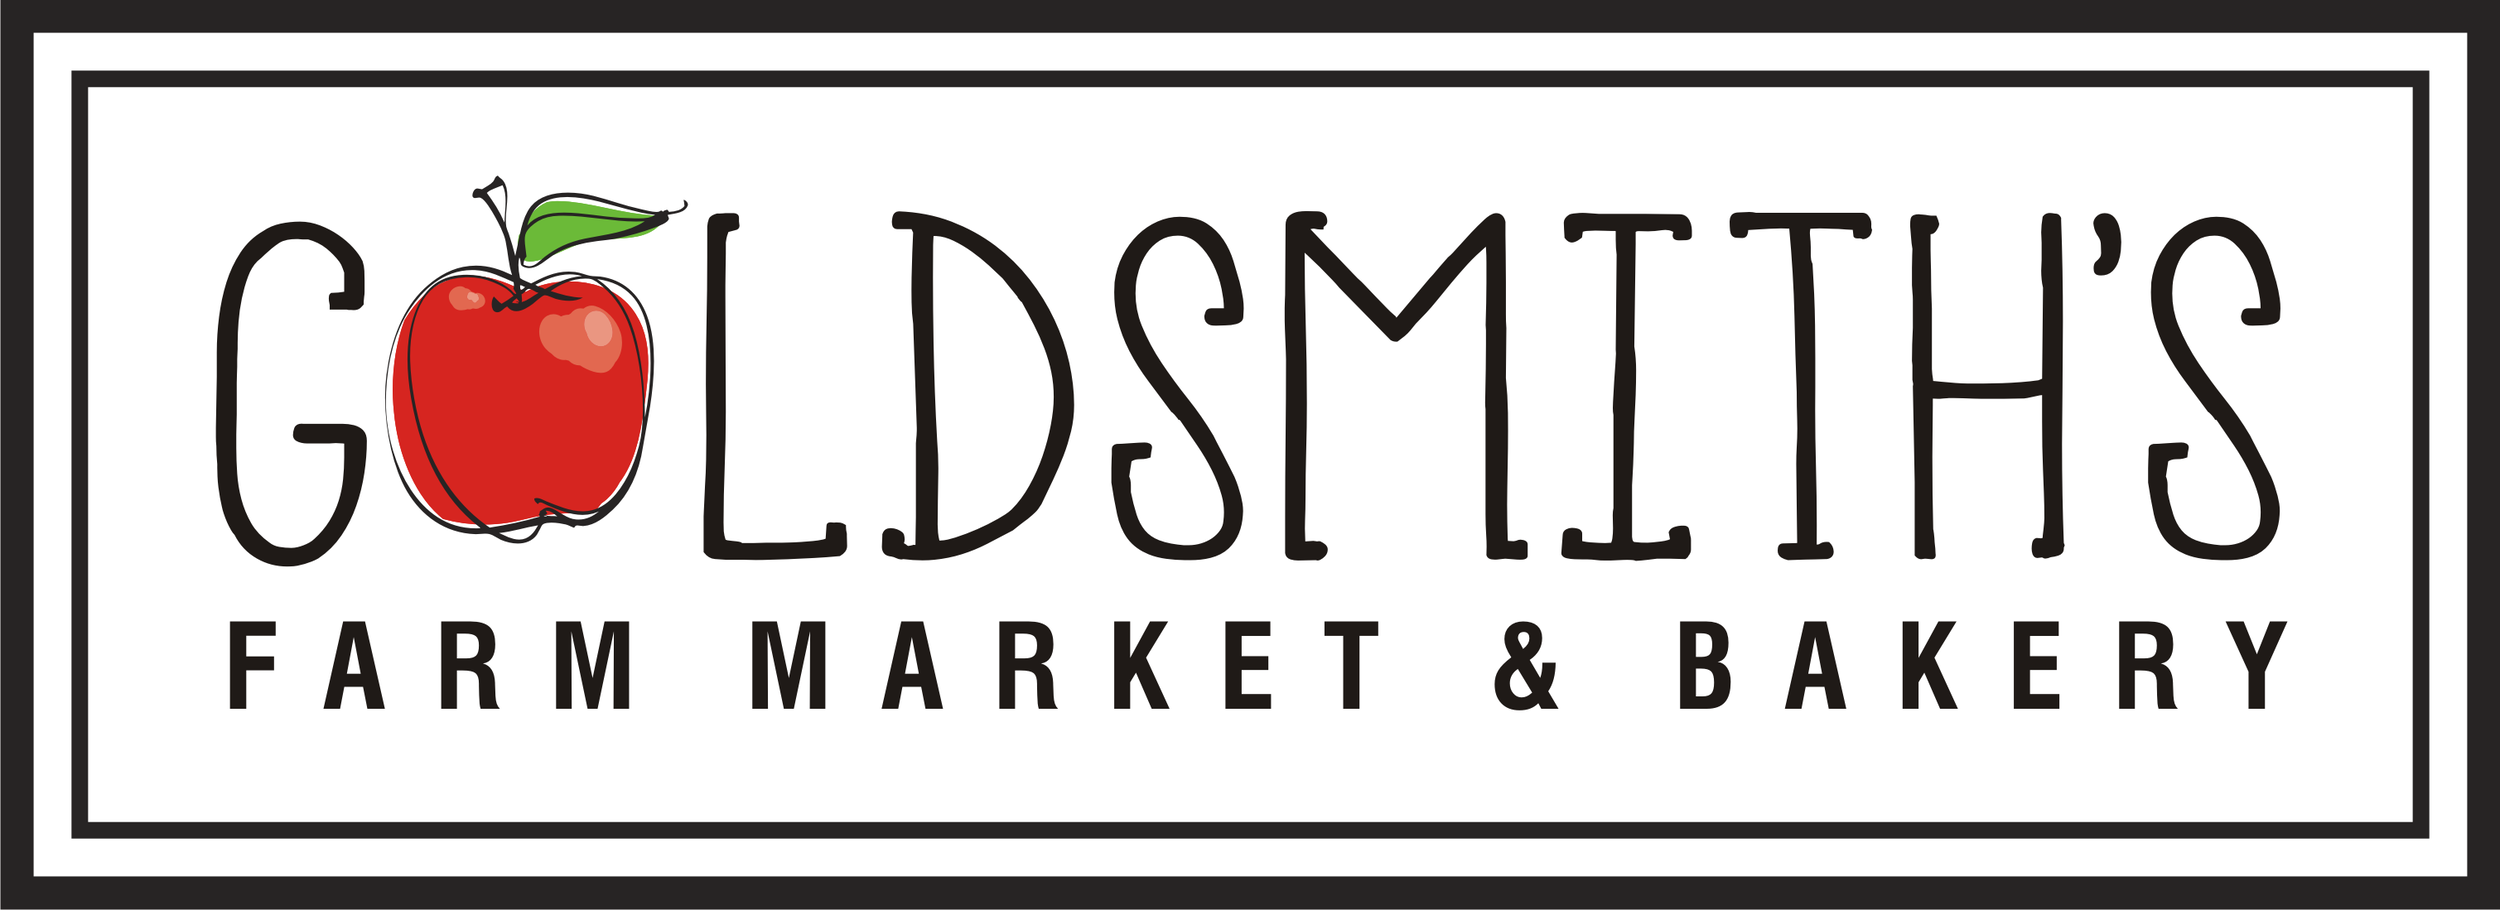 goldsmiths orchard market logo.png